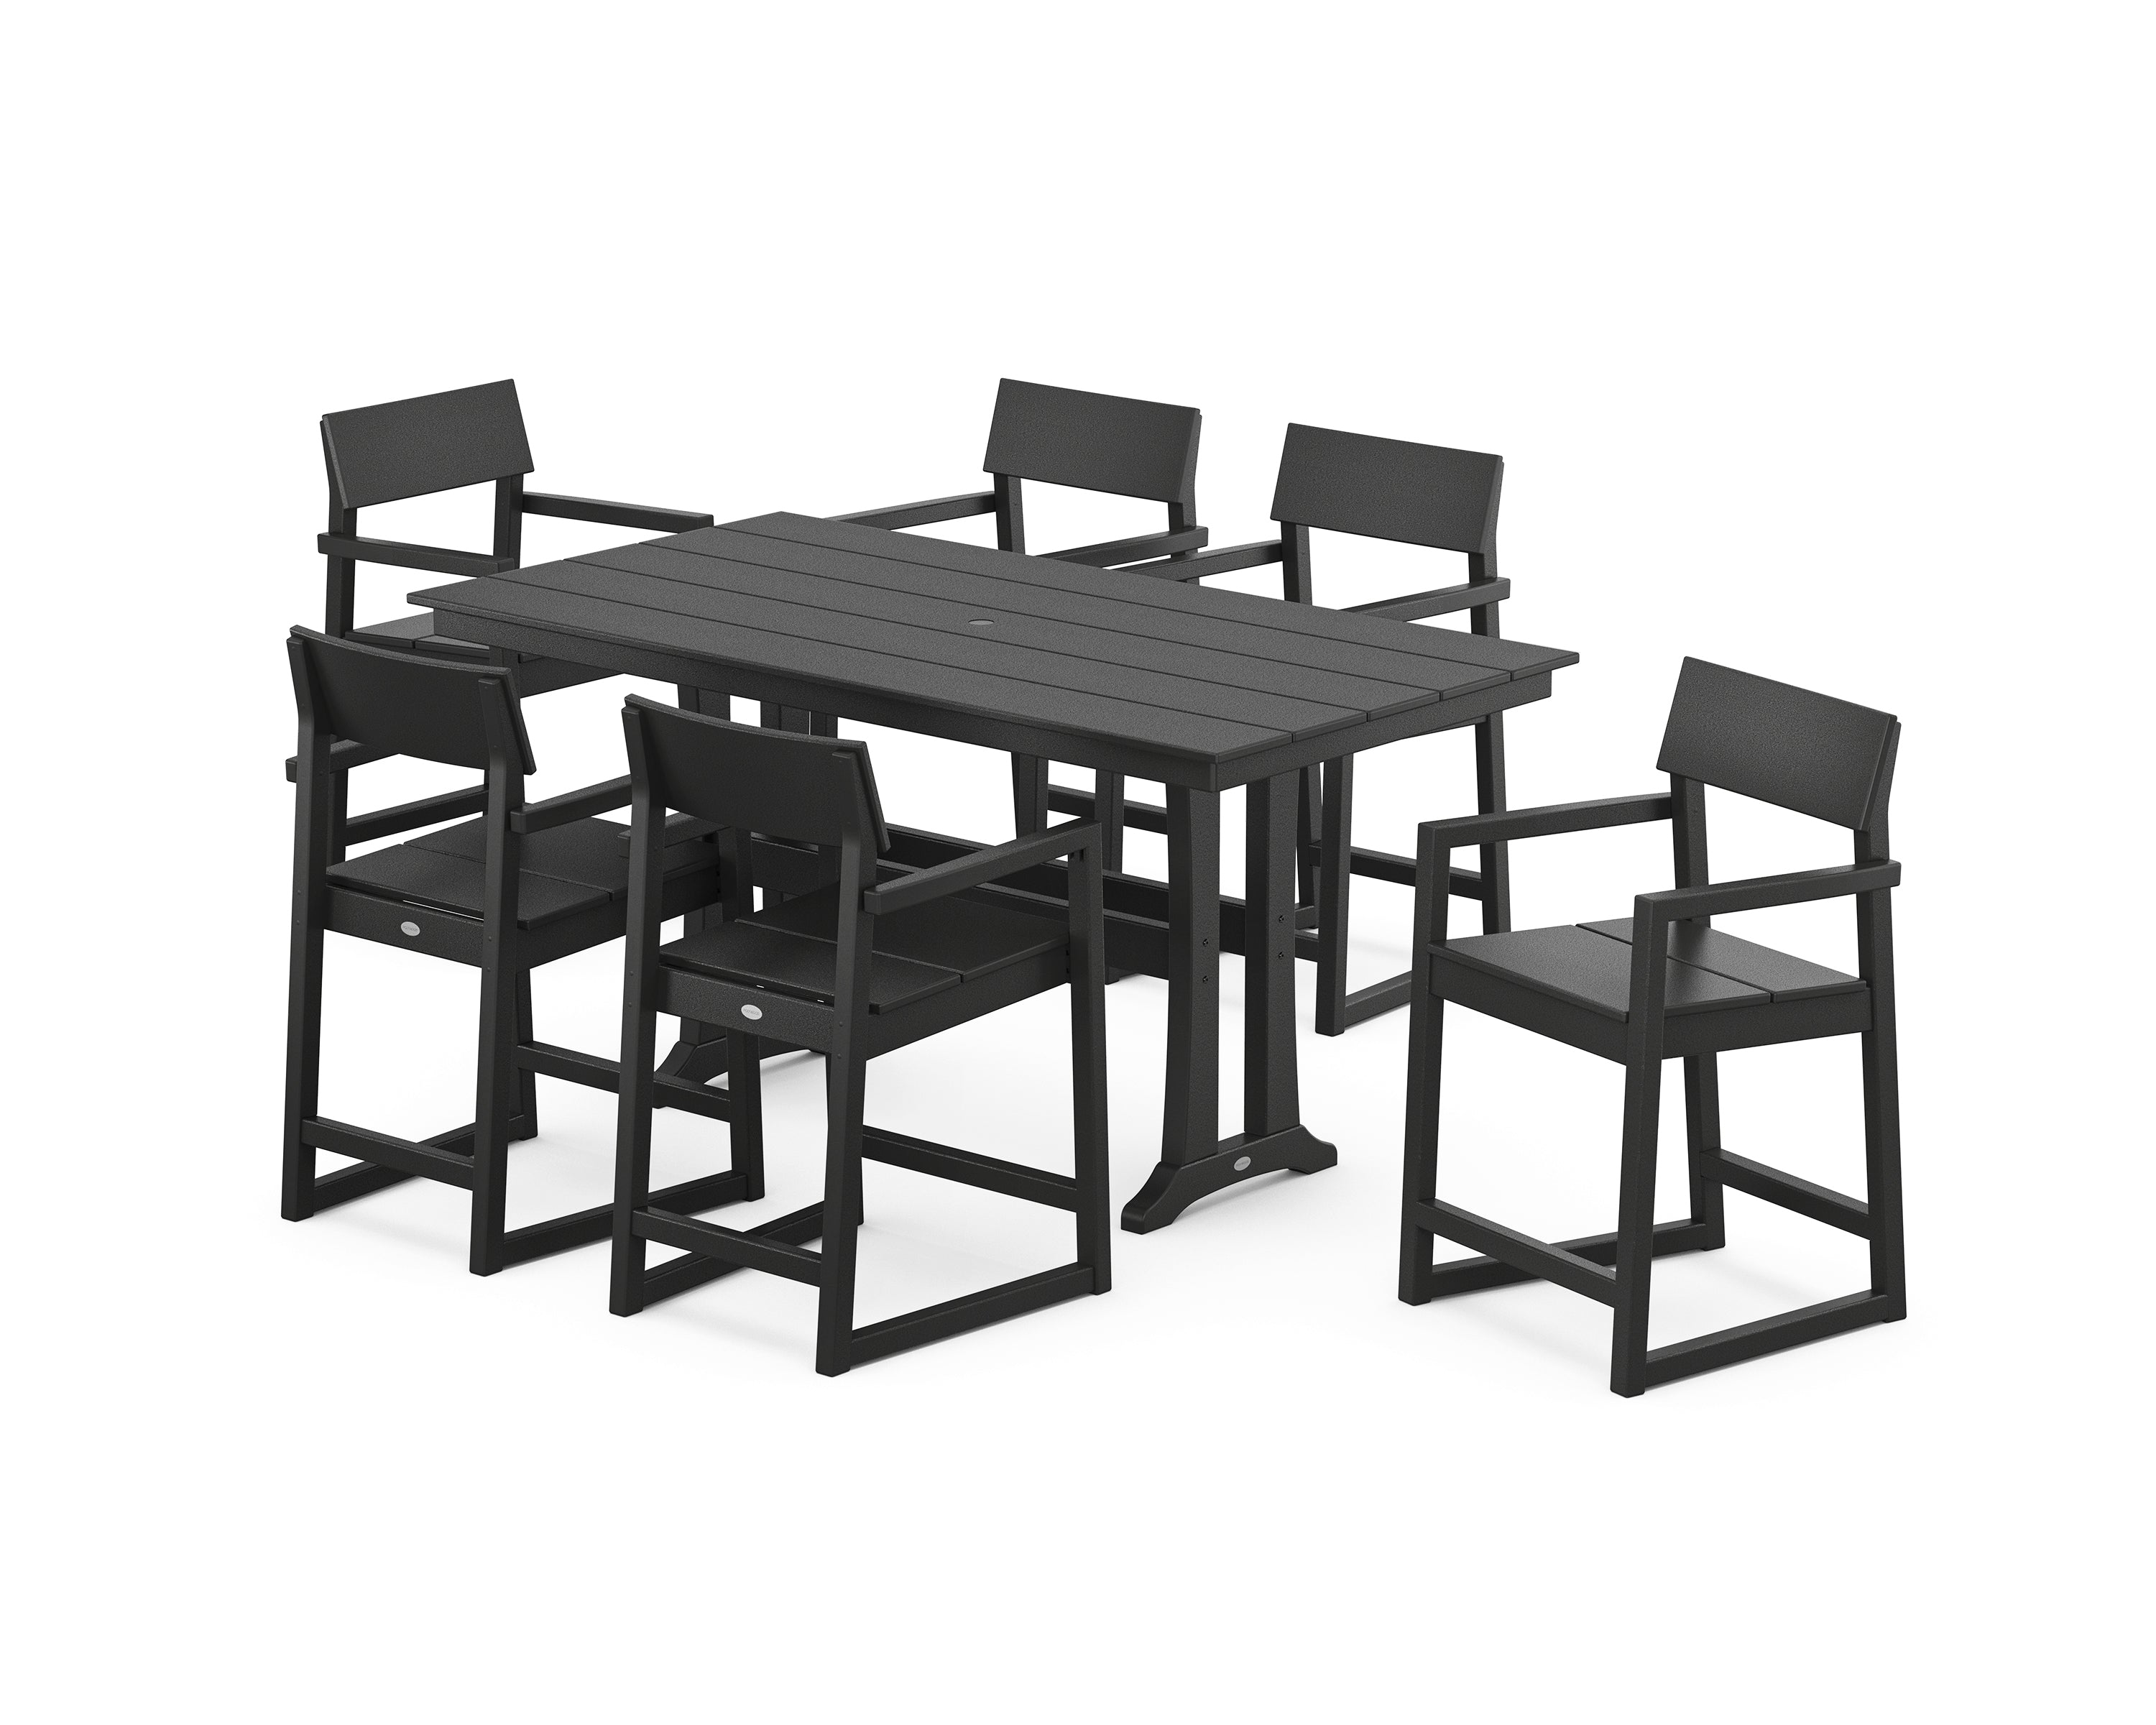 POLYWOOD® EDGE Arm Chair 7-Piece Farmhouse Counter Set with Trestle Legs in Black